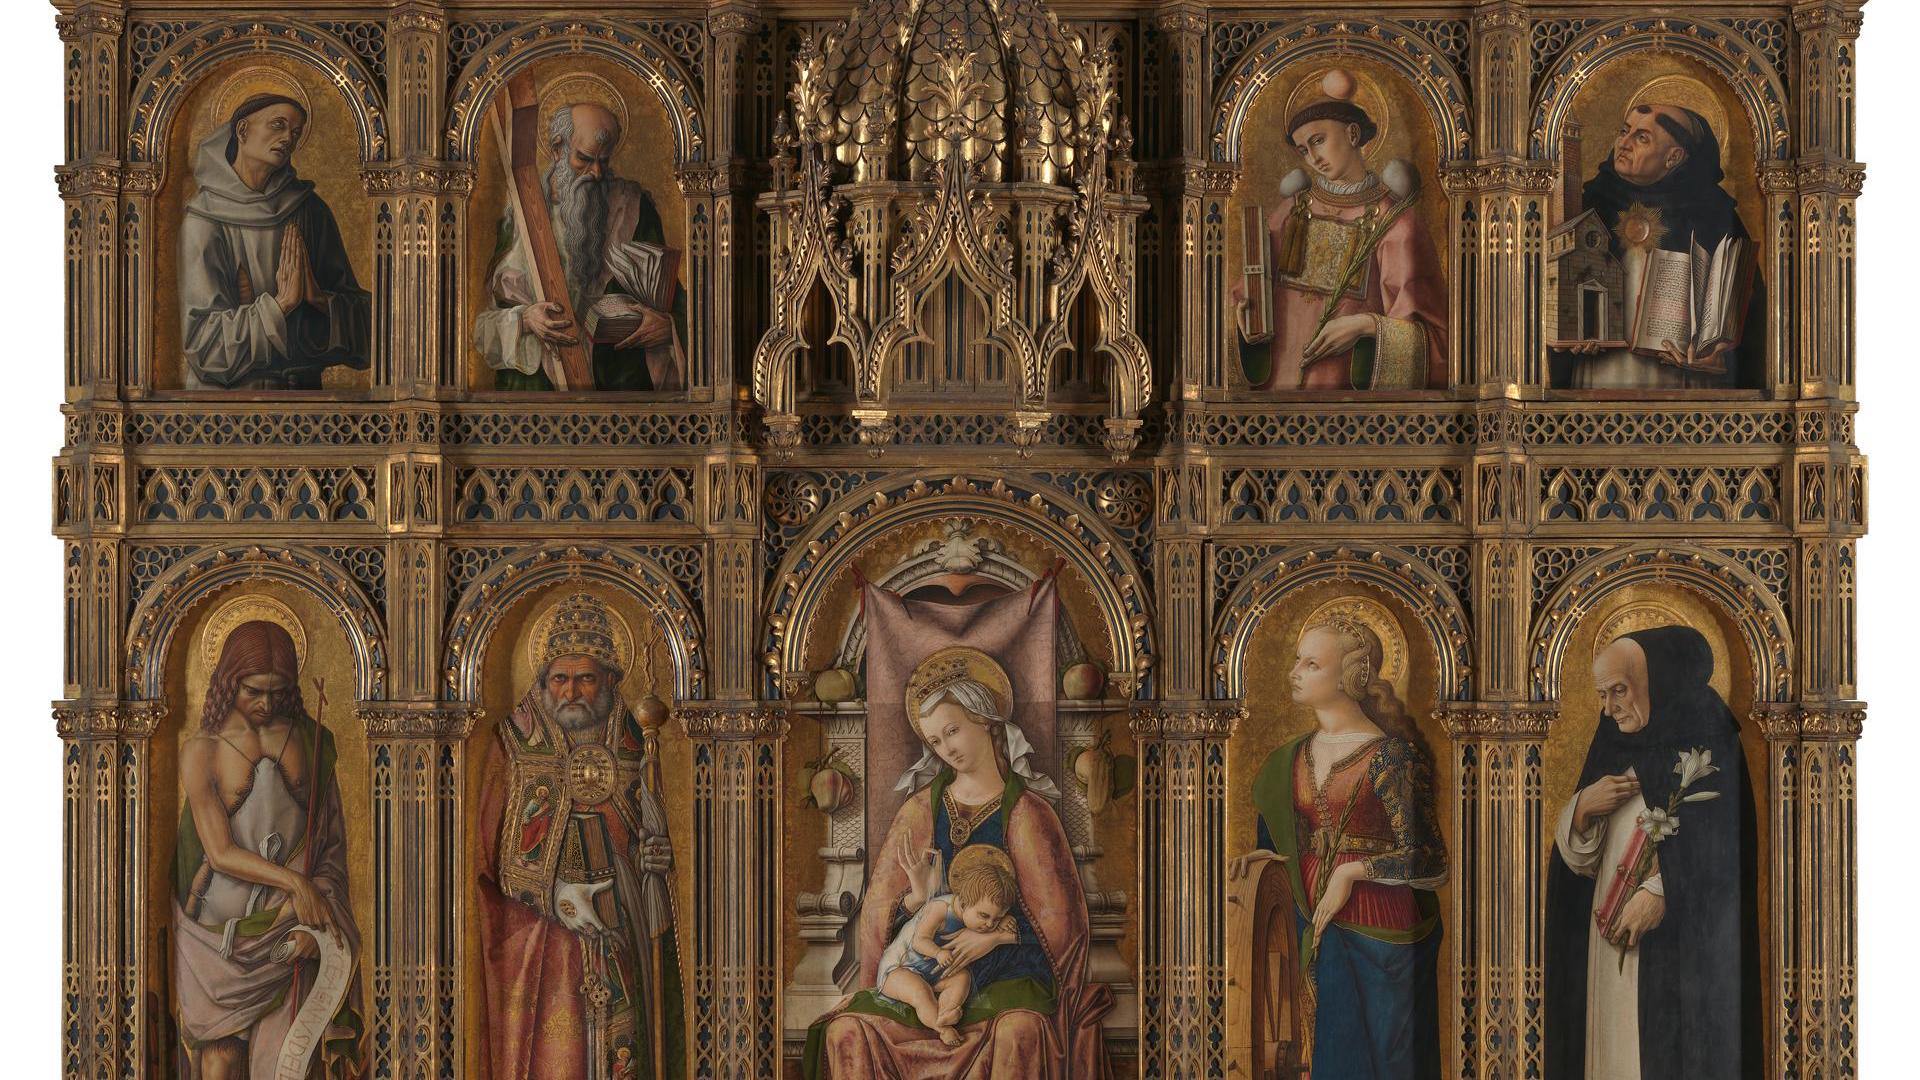 The Demidoff Altarpiece by Carlo Crivelli